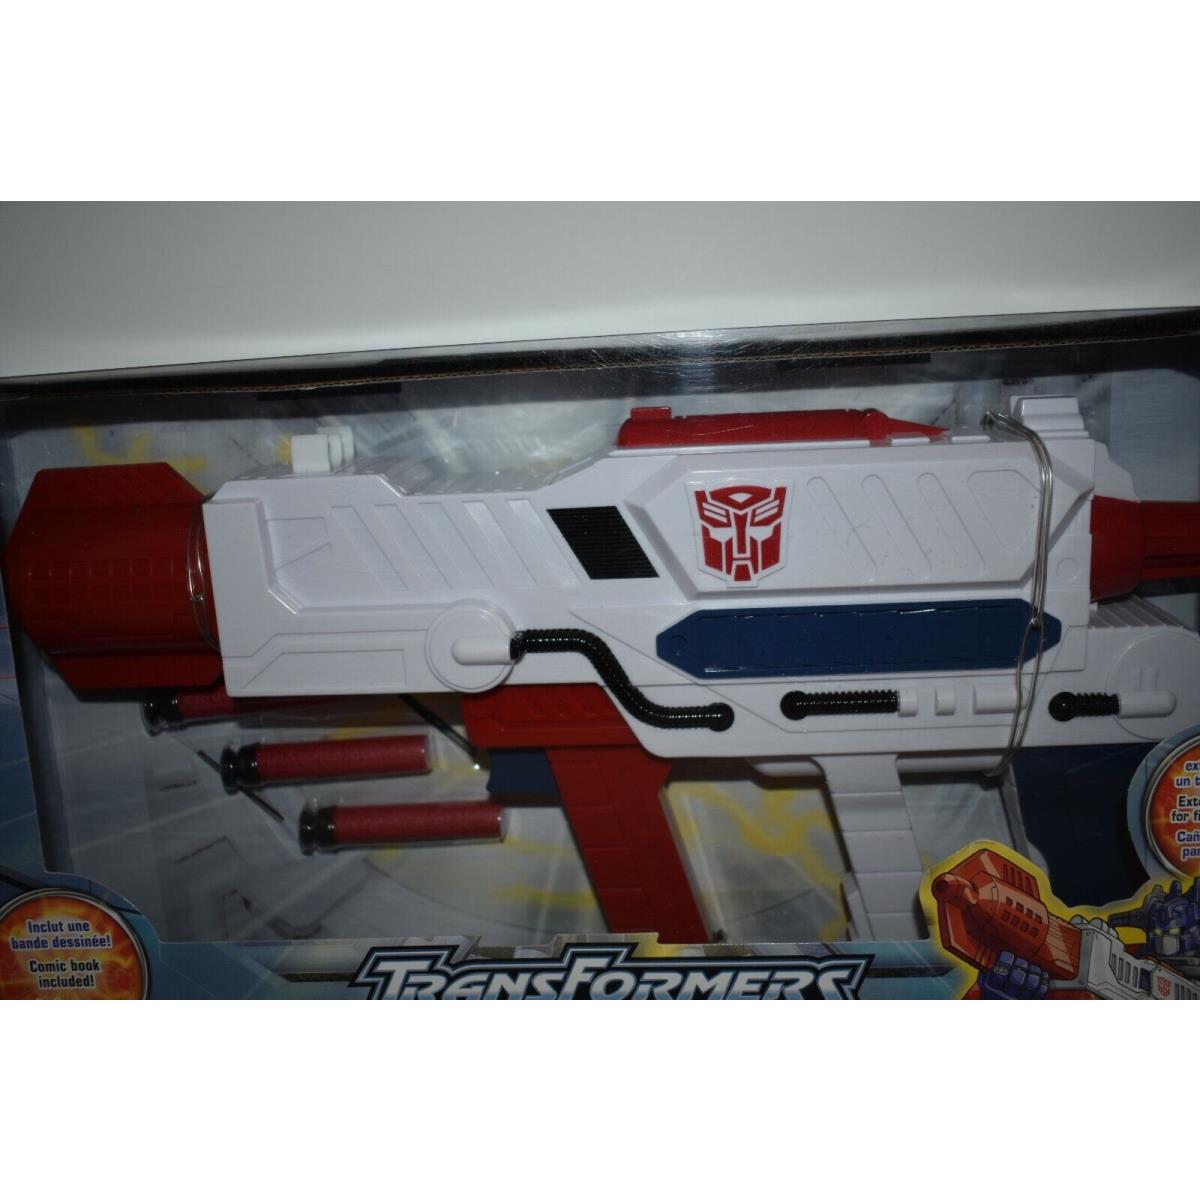 Hasbro Transformers Energon Optimus-prime Energon Blaster 2003 Misb